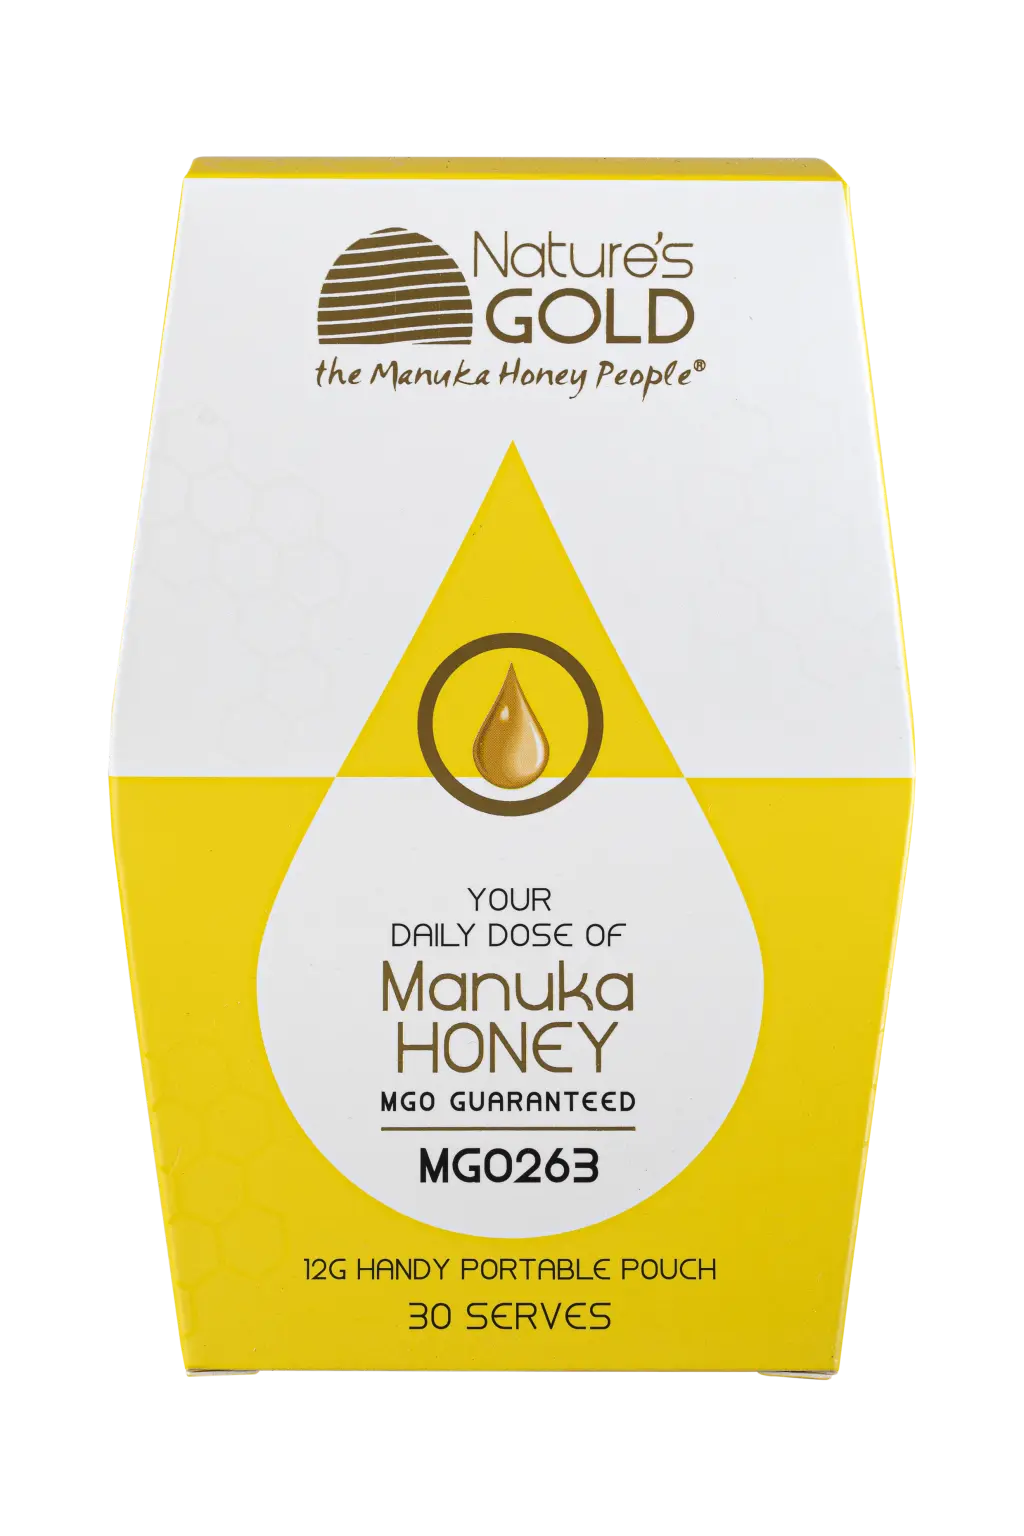 A box of Manuka Honey MGO263 - side view